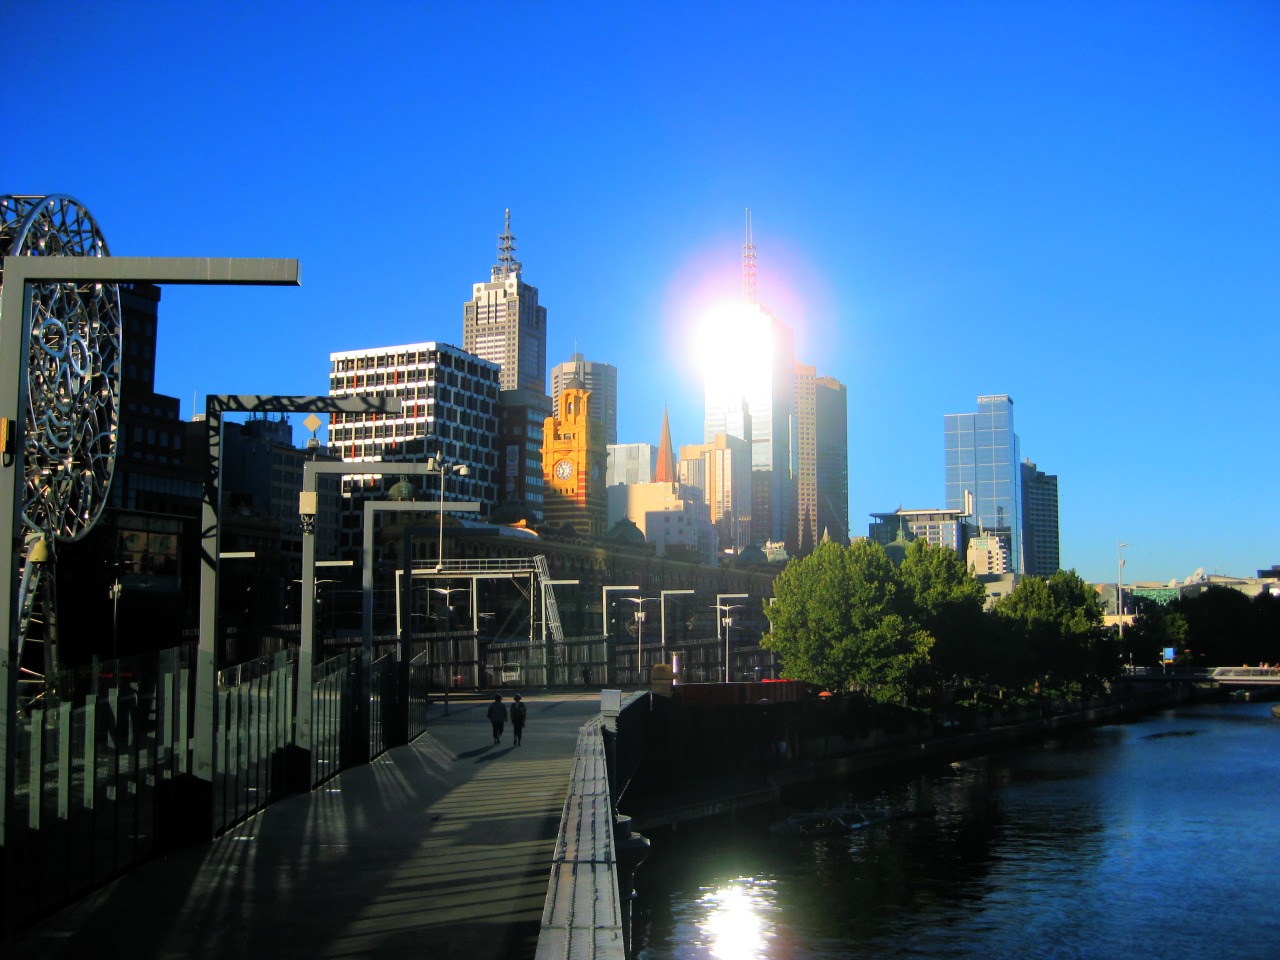 Melbourne Image 1